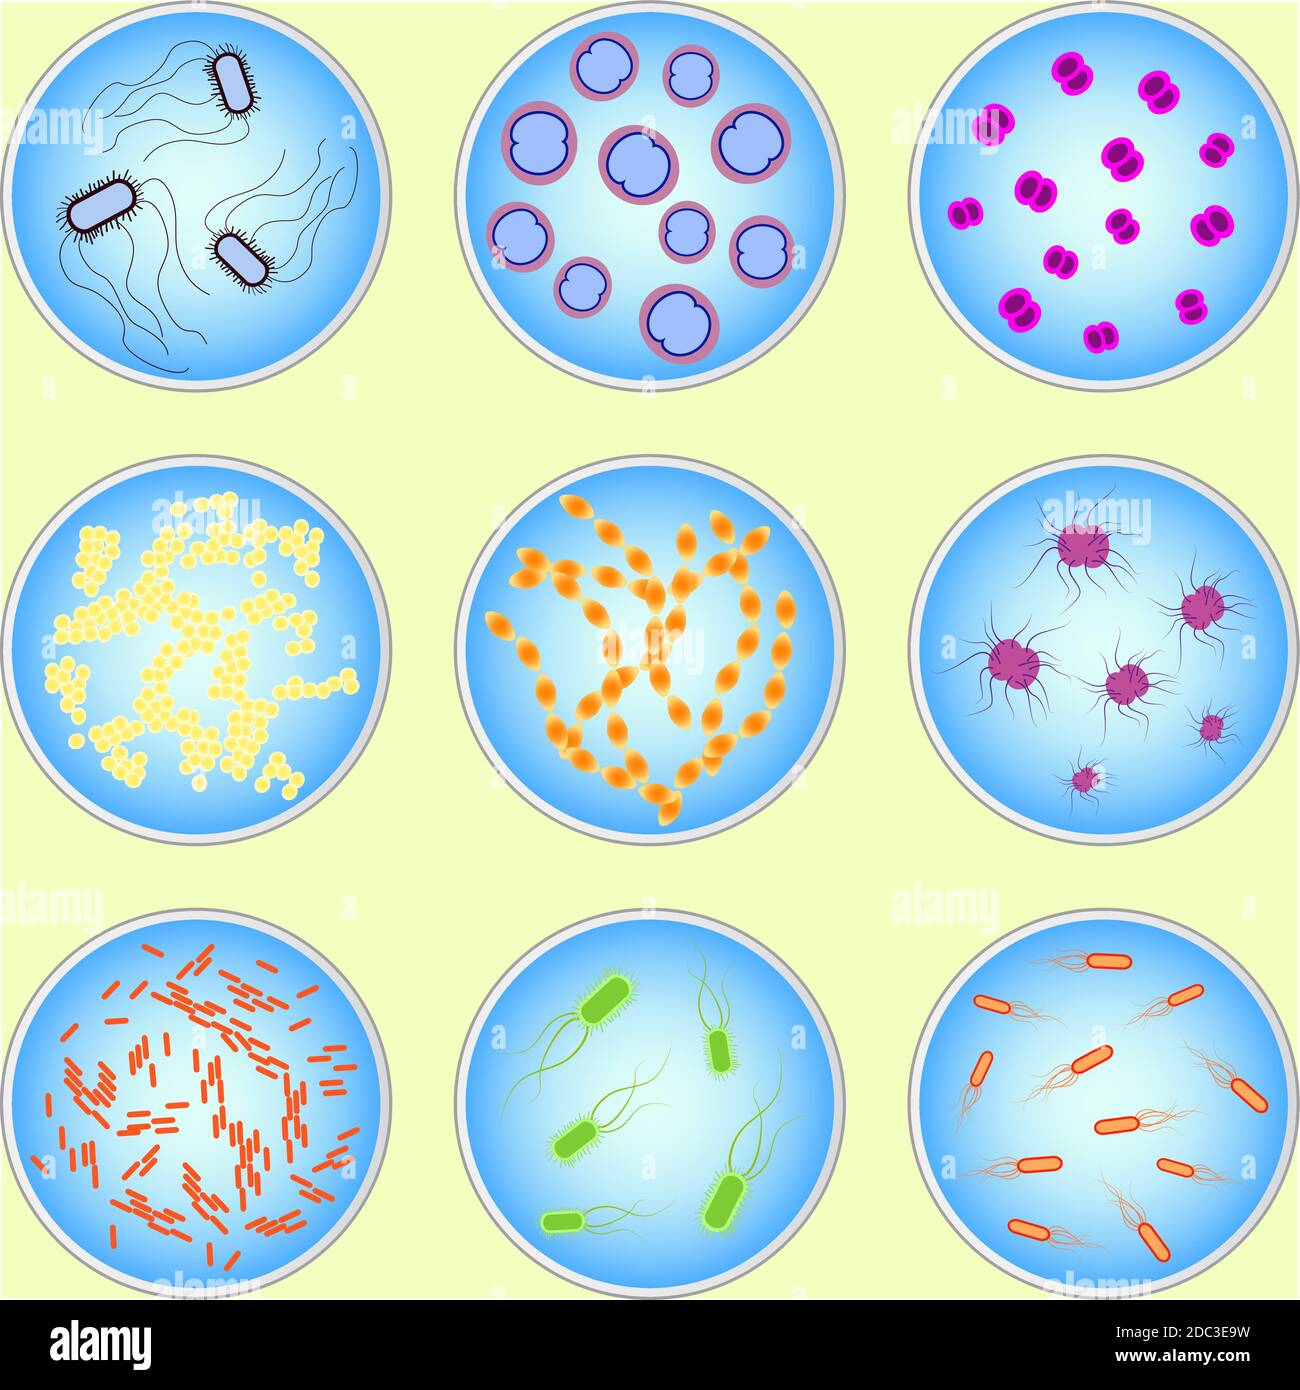 microorganisms under microscope